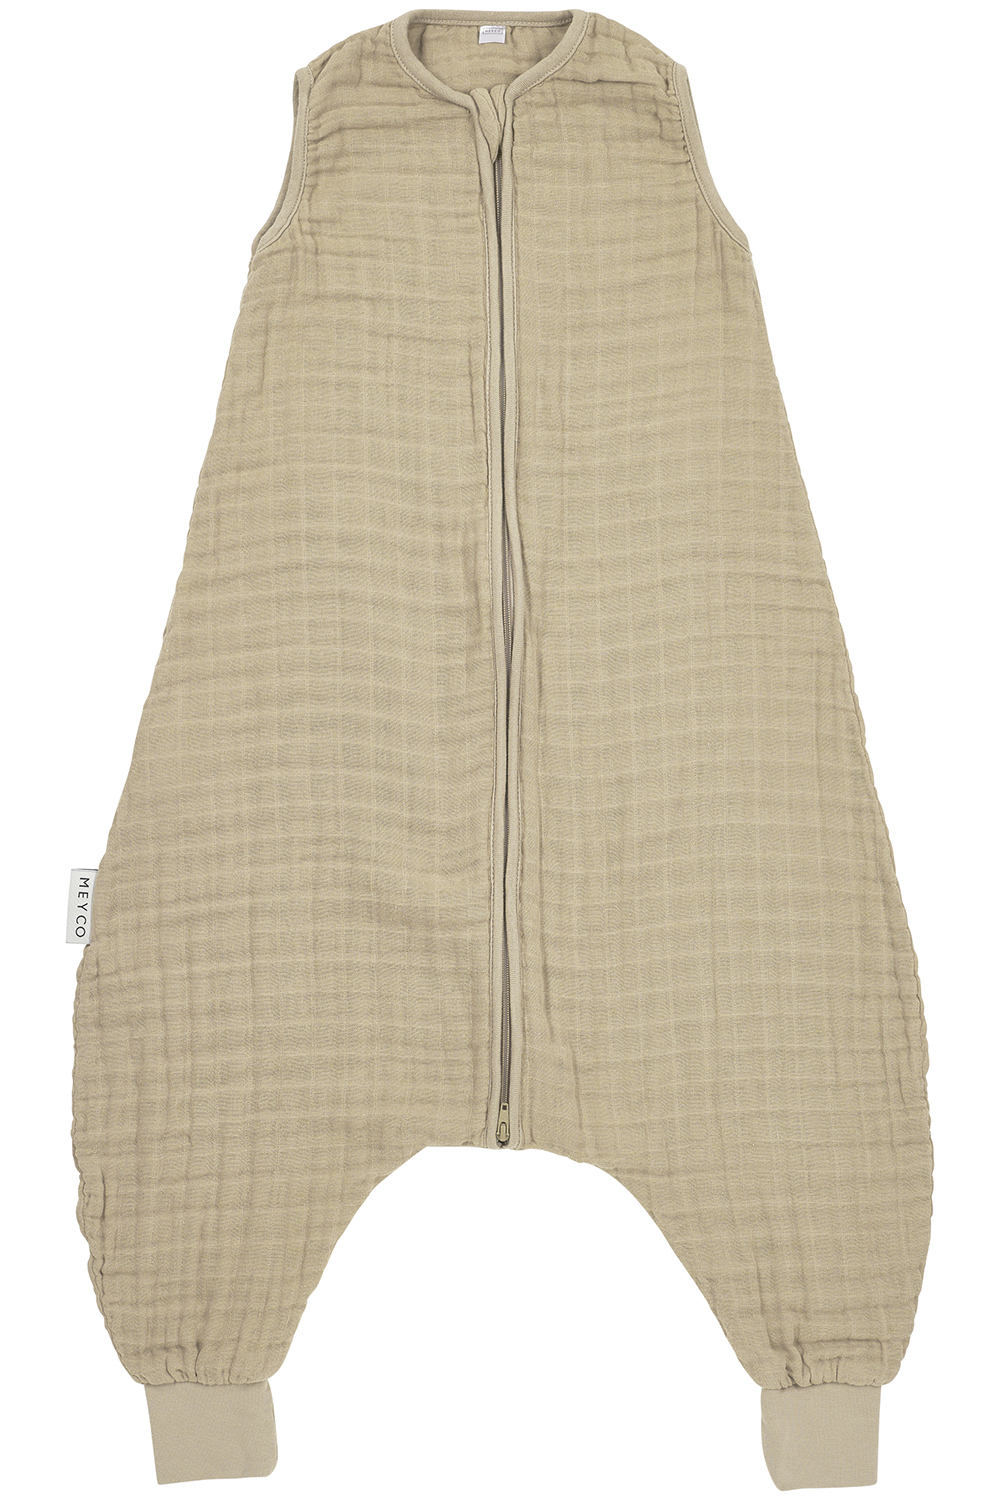 Baby summer sleep overall jumper pre-washed muslin Uni - sand - 92cm